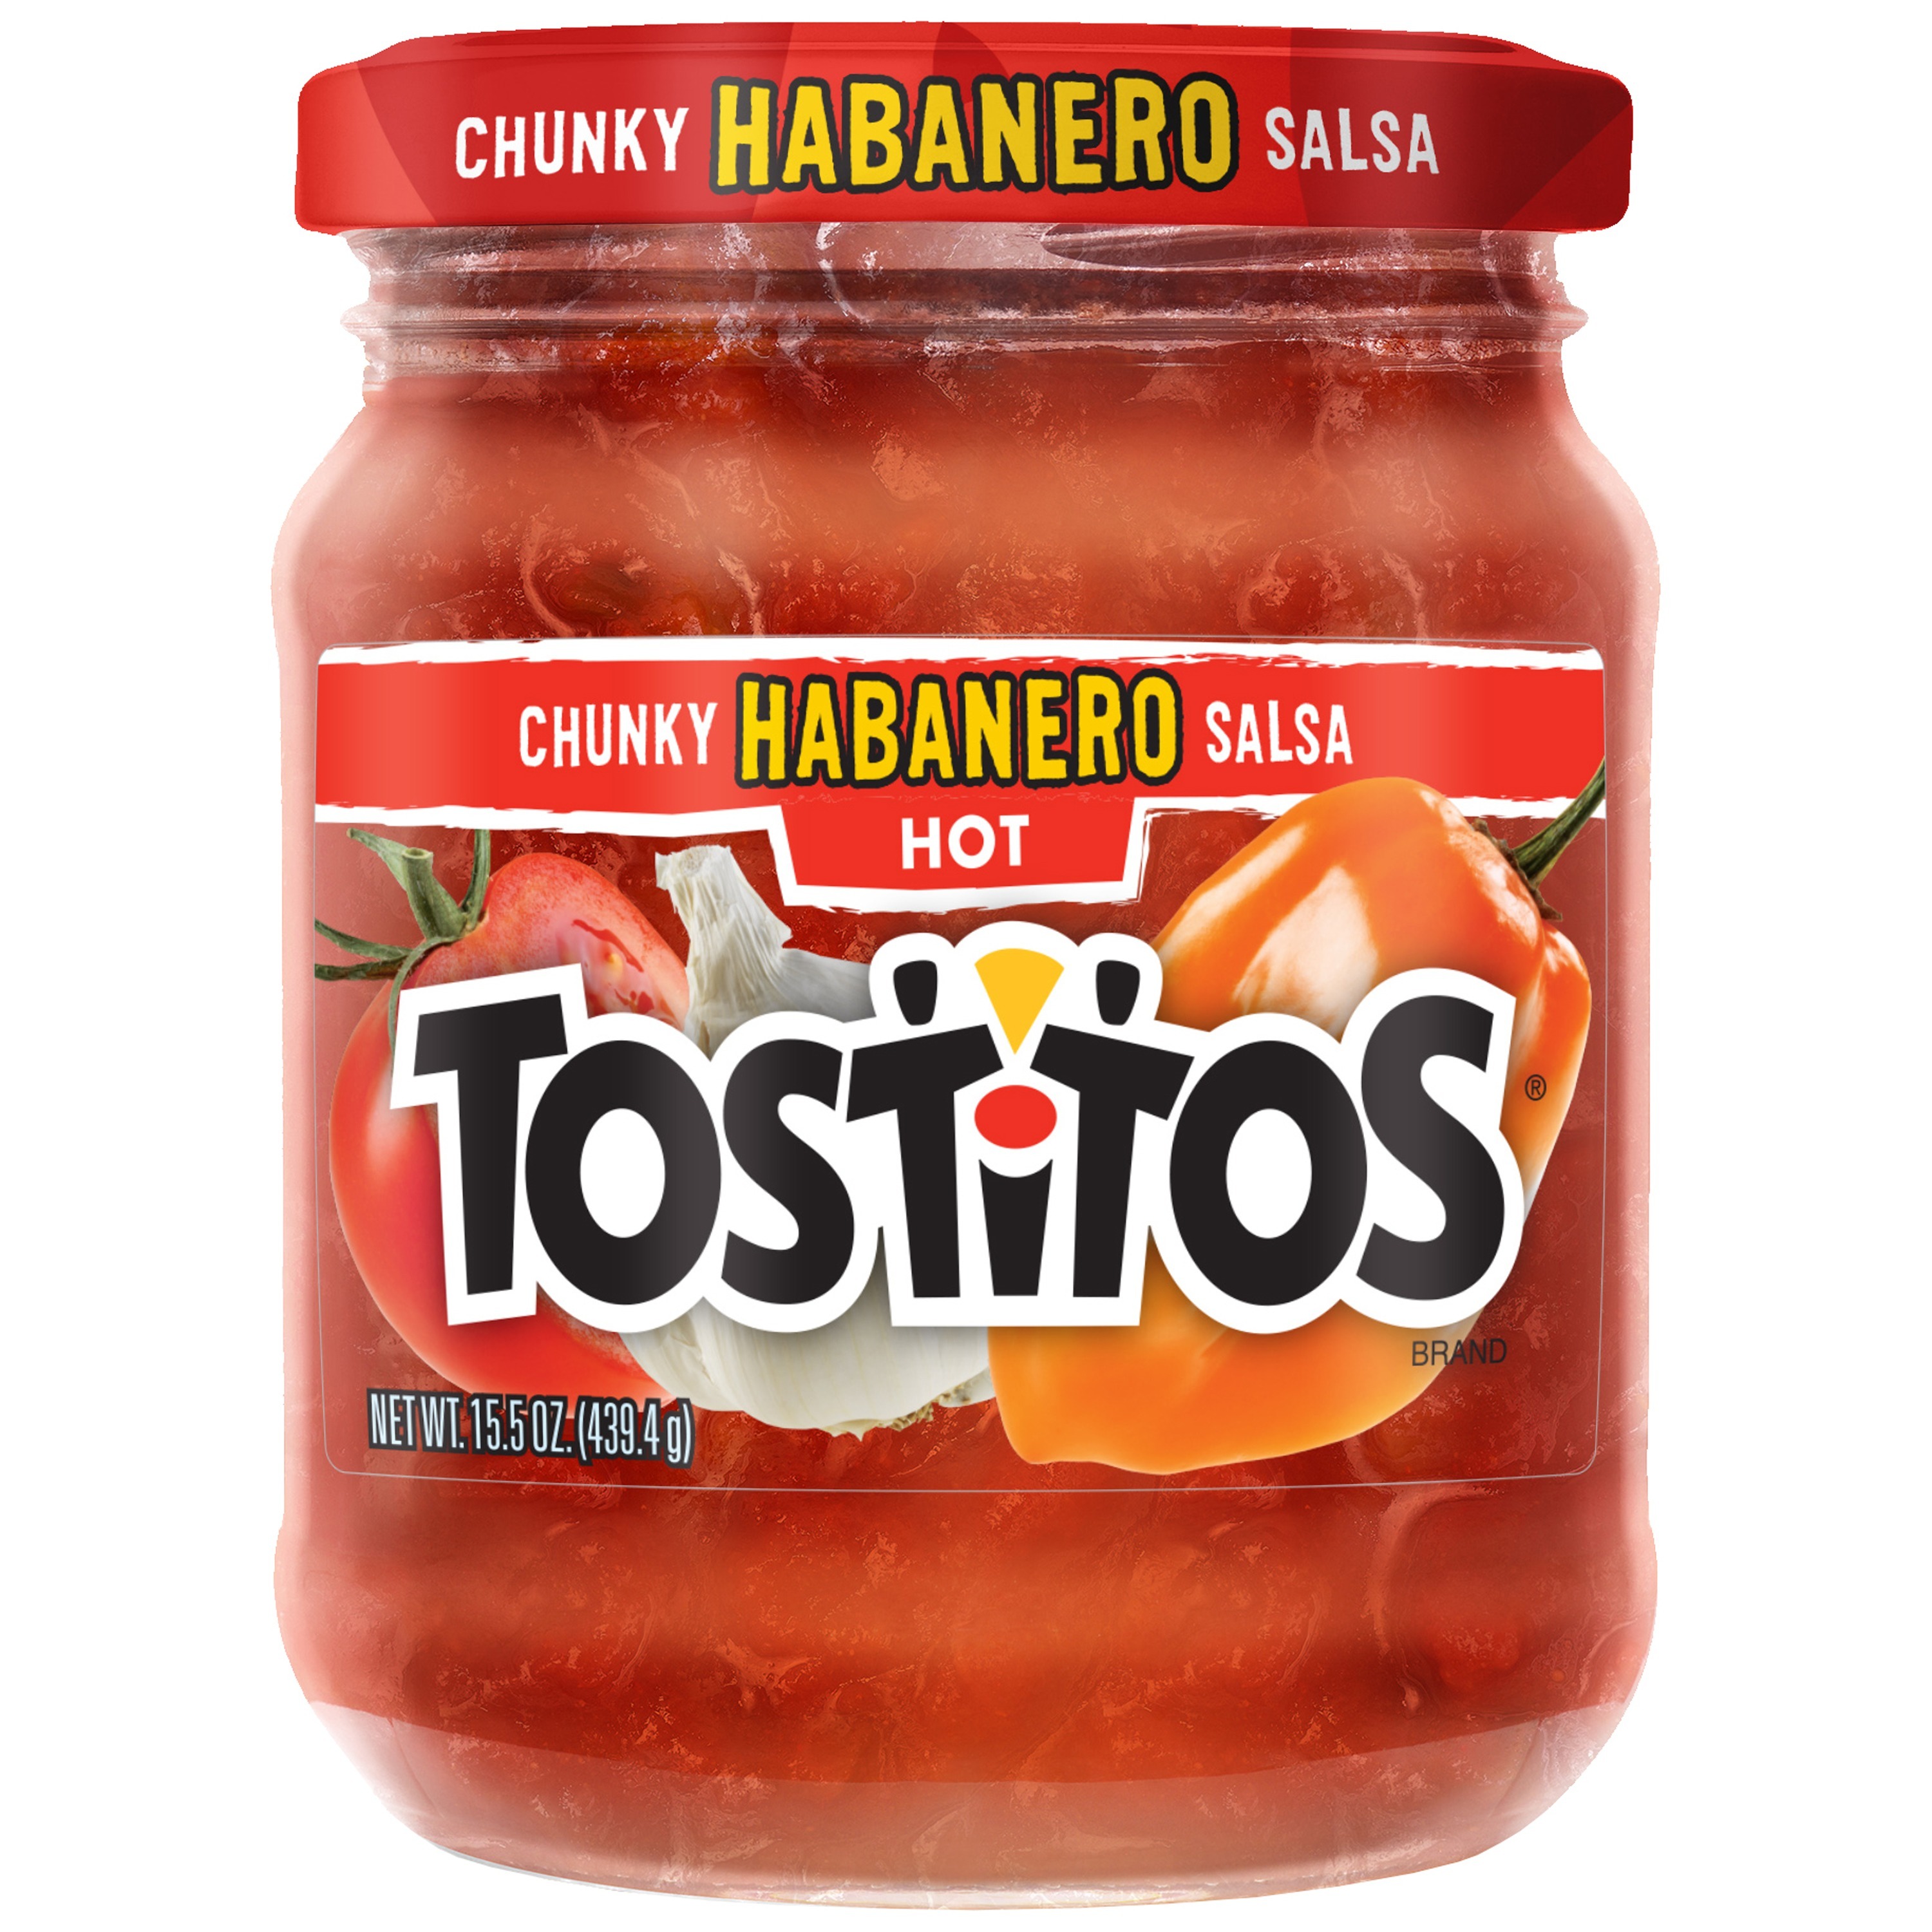 Tostitos Chunky Habanero Salsa, 15.5 oz, Single Jar pack - image 4 of 9